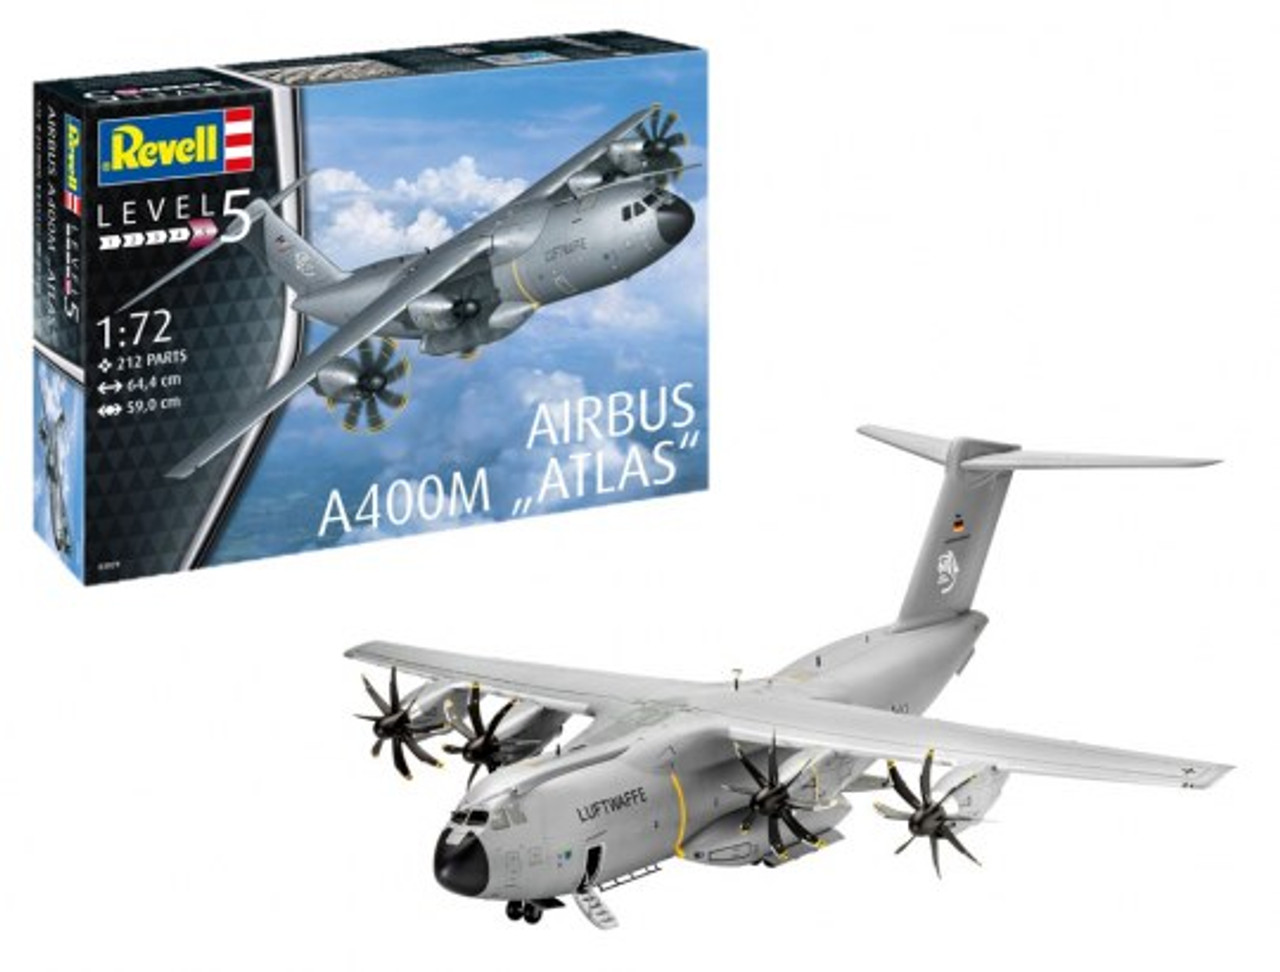 Revell 03929 1/72 Airbus A400M Atlas "Luftwaffe" Plastic Model Kit